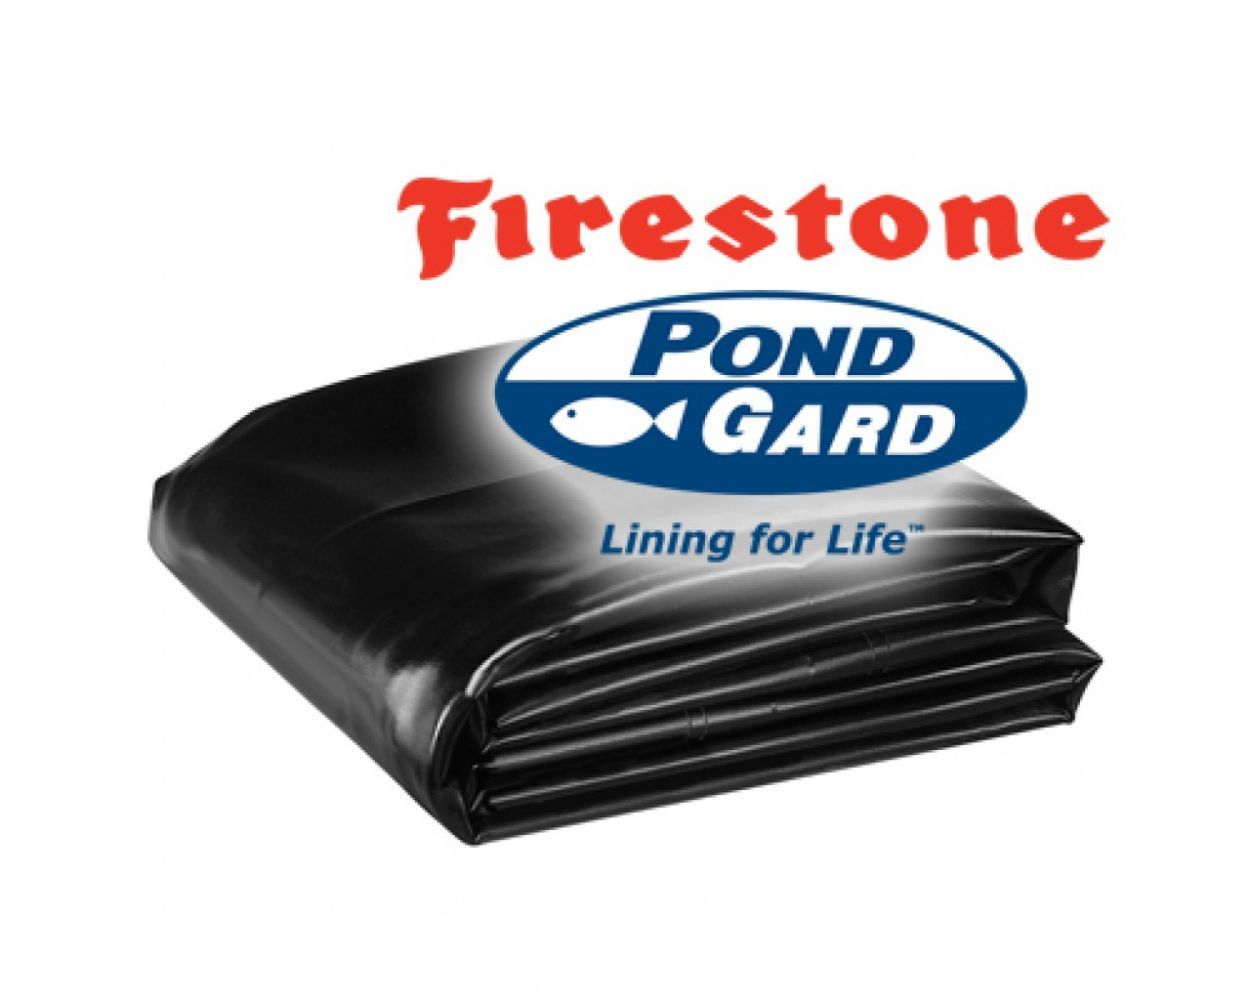 https://www.everything-ponds.com/media/catalog/product/cache/3ddb7950e7e0440d5b6136ee3261eb6f/f/i/firestone-pondguard-epdm-rubber-pond-liner__80436_1_1.jpg